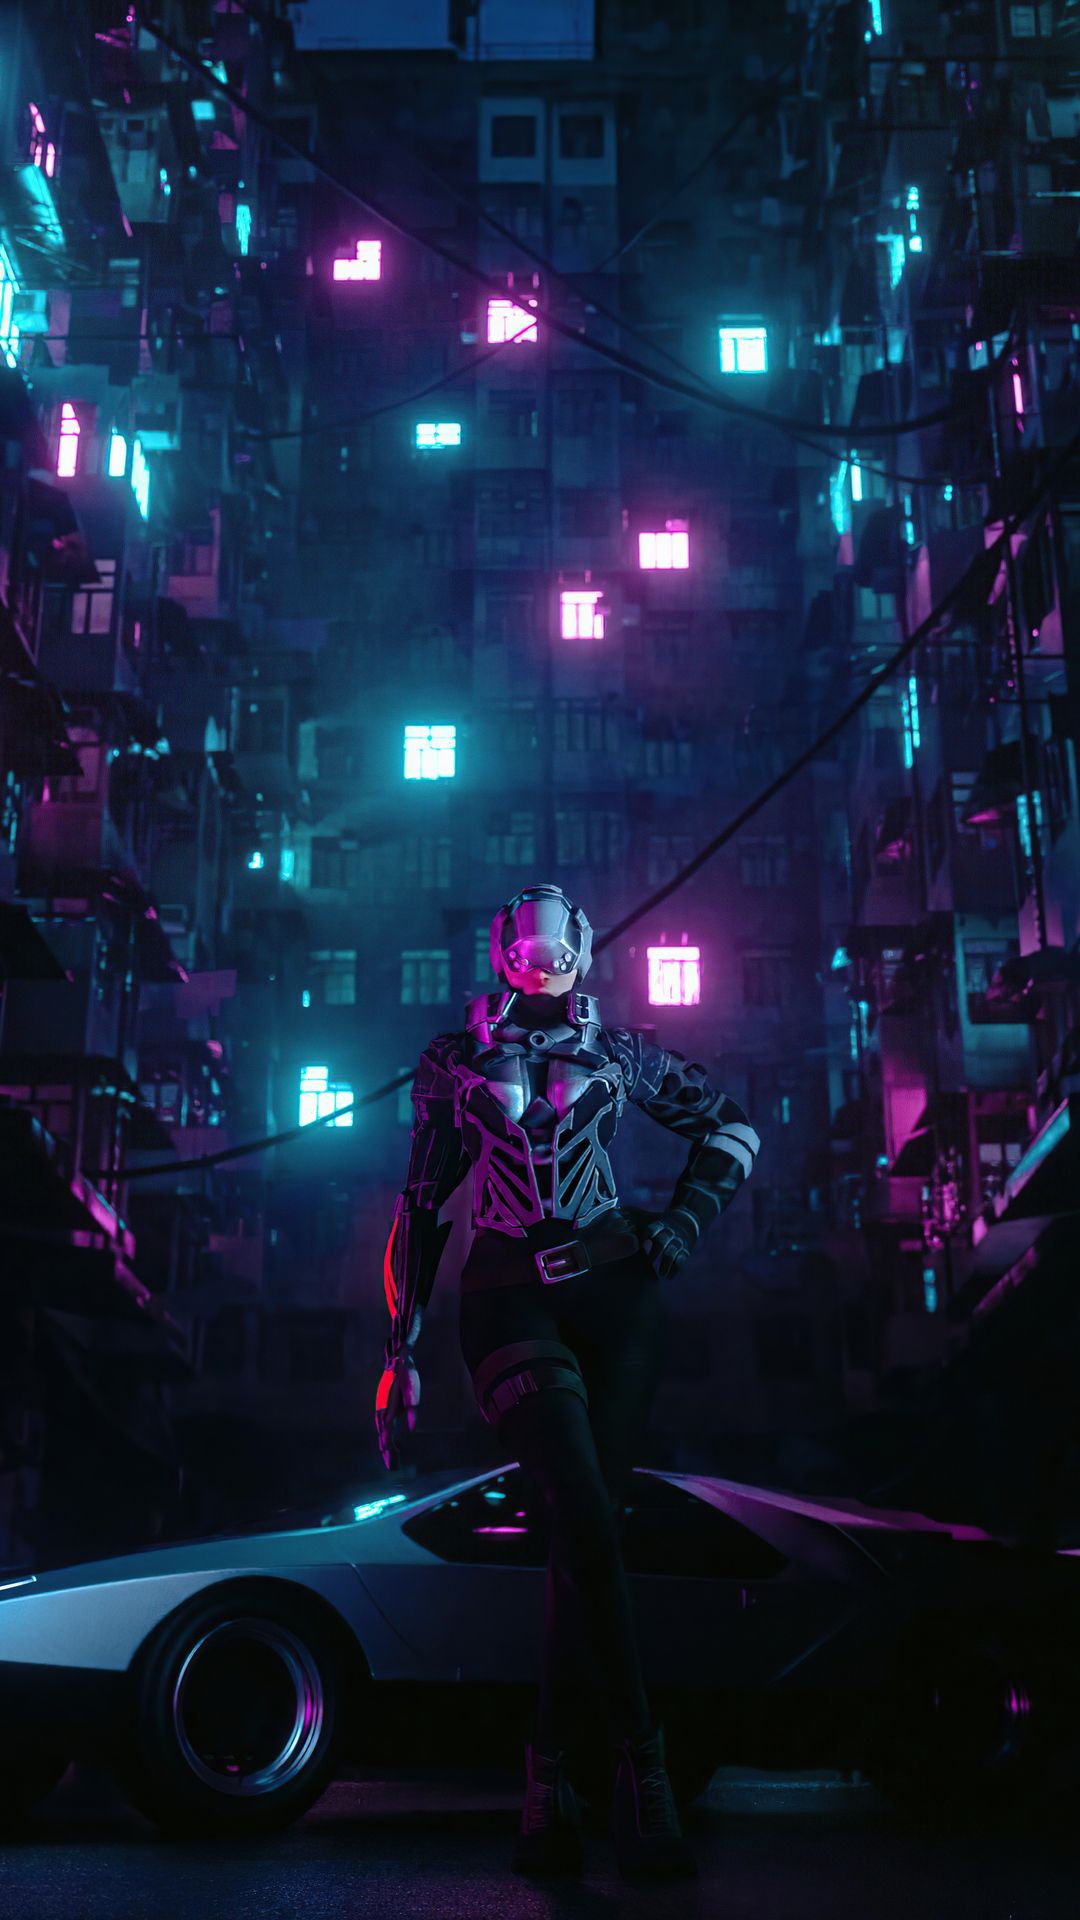 Cyberpunk 2077 wallpaper 4k for mobiles and tablets - Cyberpunk